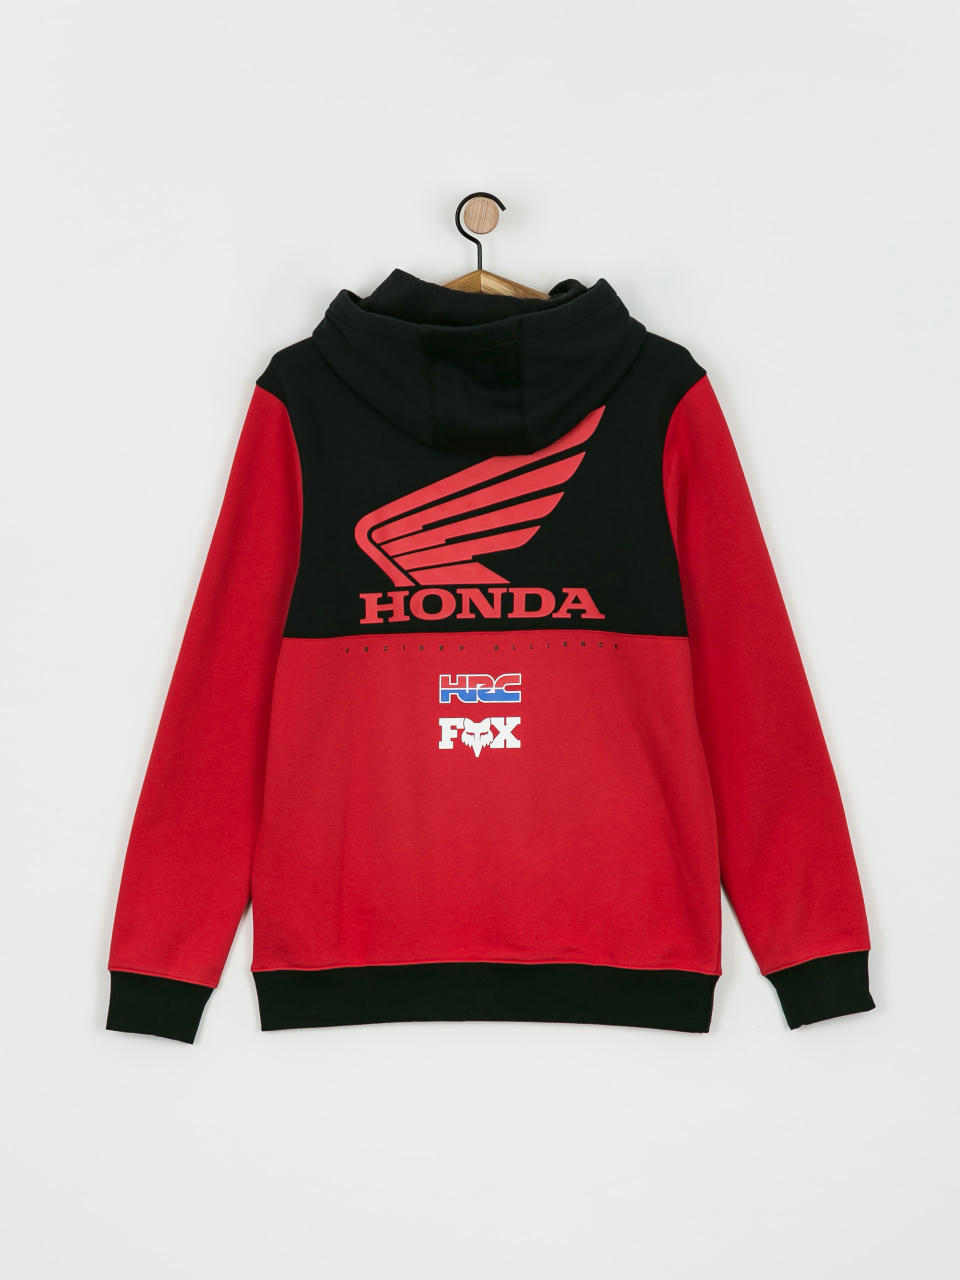 FOX X HONDA PULLOVER FLEECE [FLM RD] XS Fox Racing®, 60% OFF